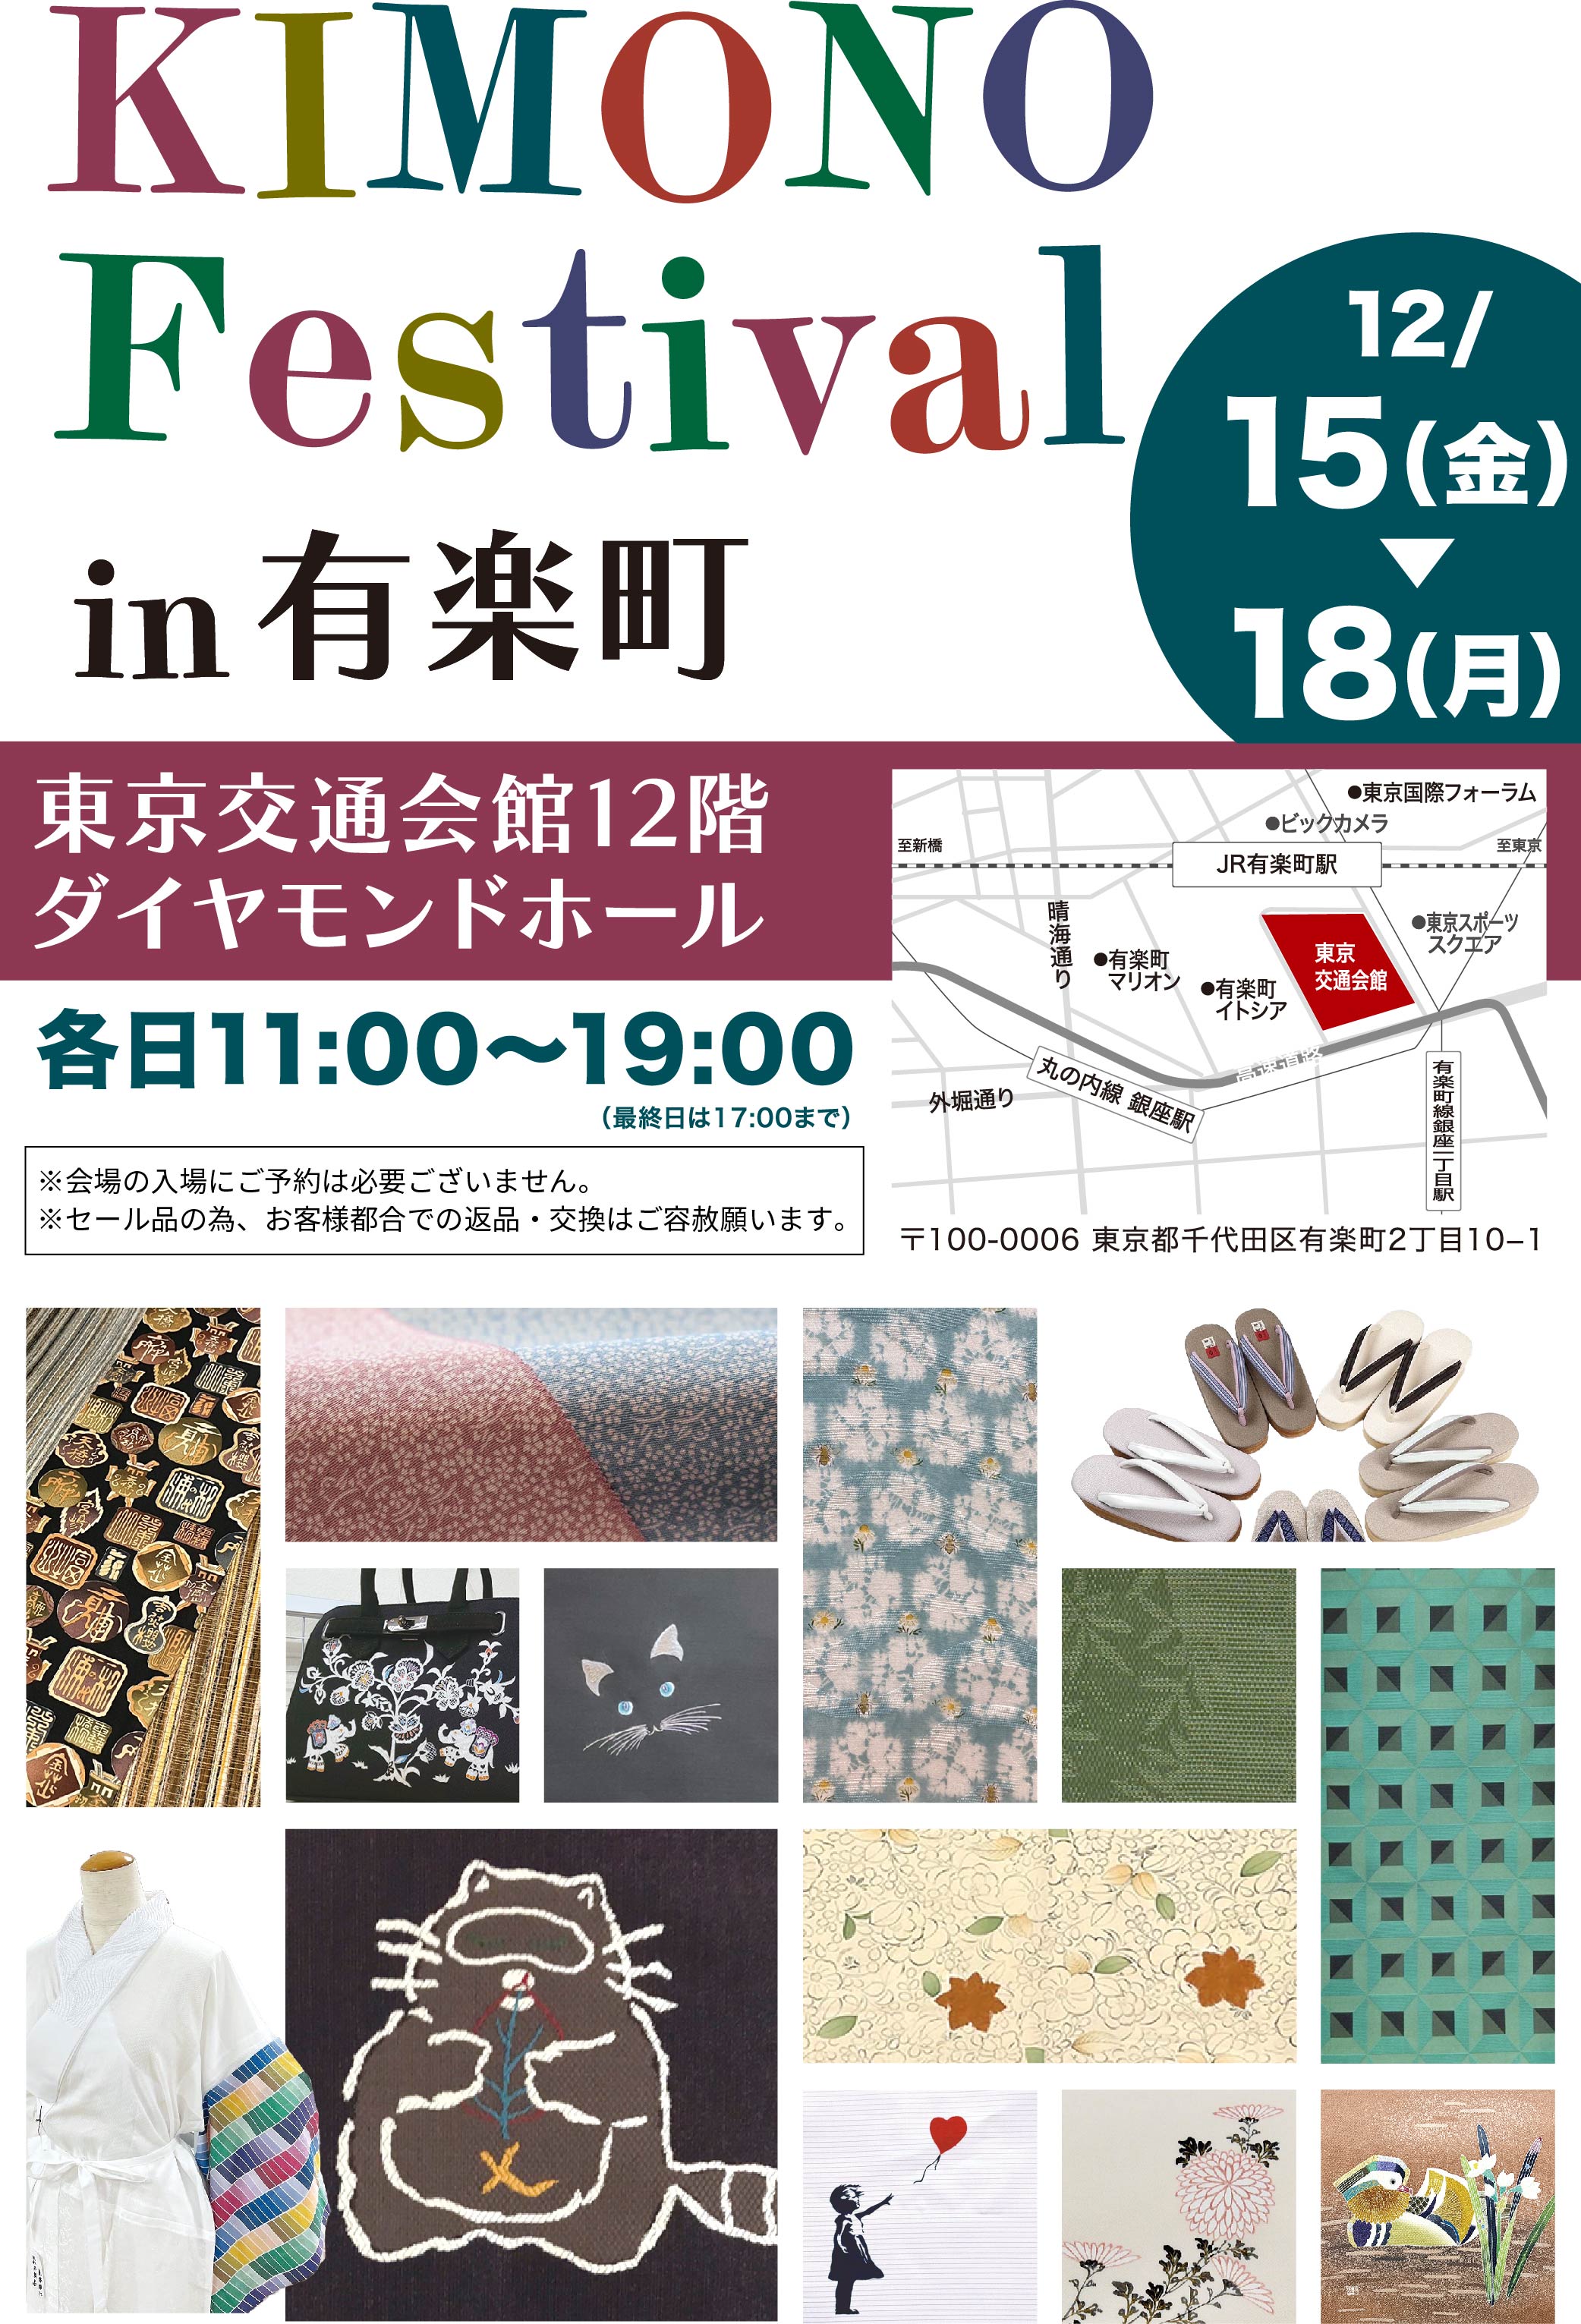 KIMONO Festival in 有楽町　きものフェスティバル　12月15日→18日(月)